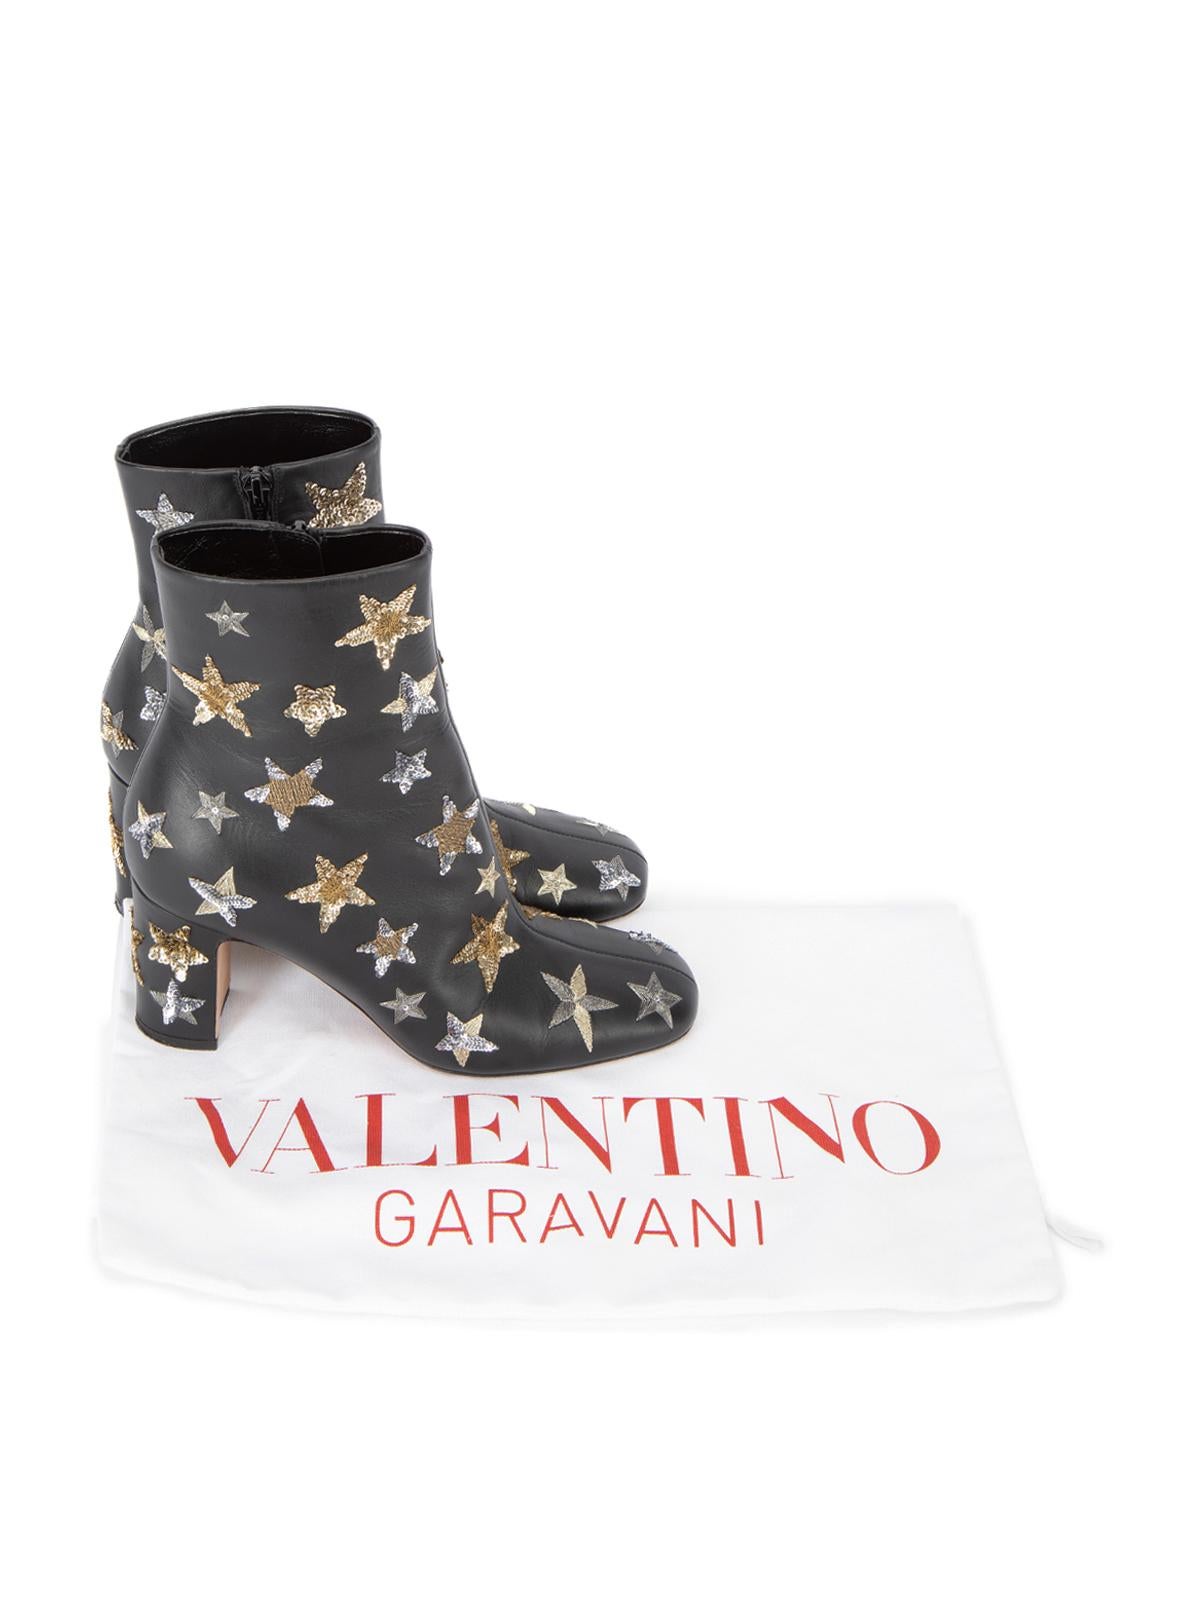 Pre-Loved Valentino Garavani Women's Black Star Embellished Ankle Boots 4